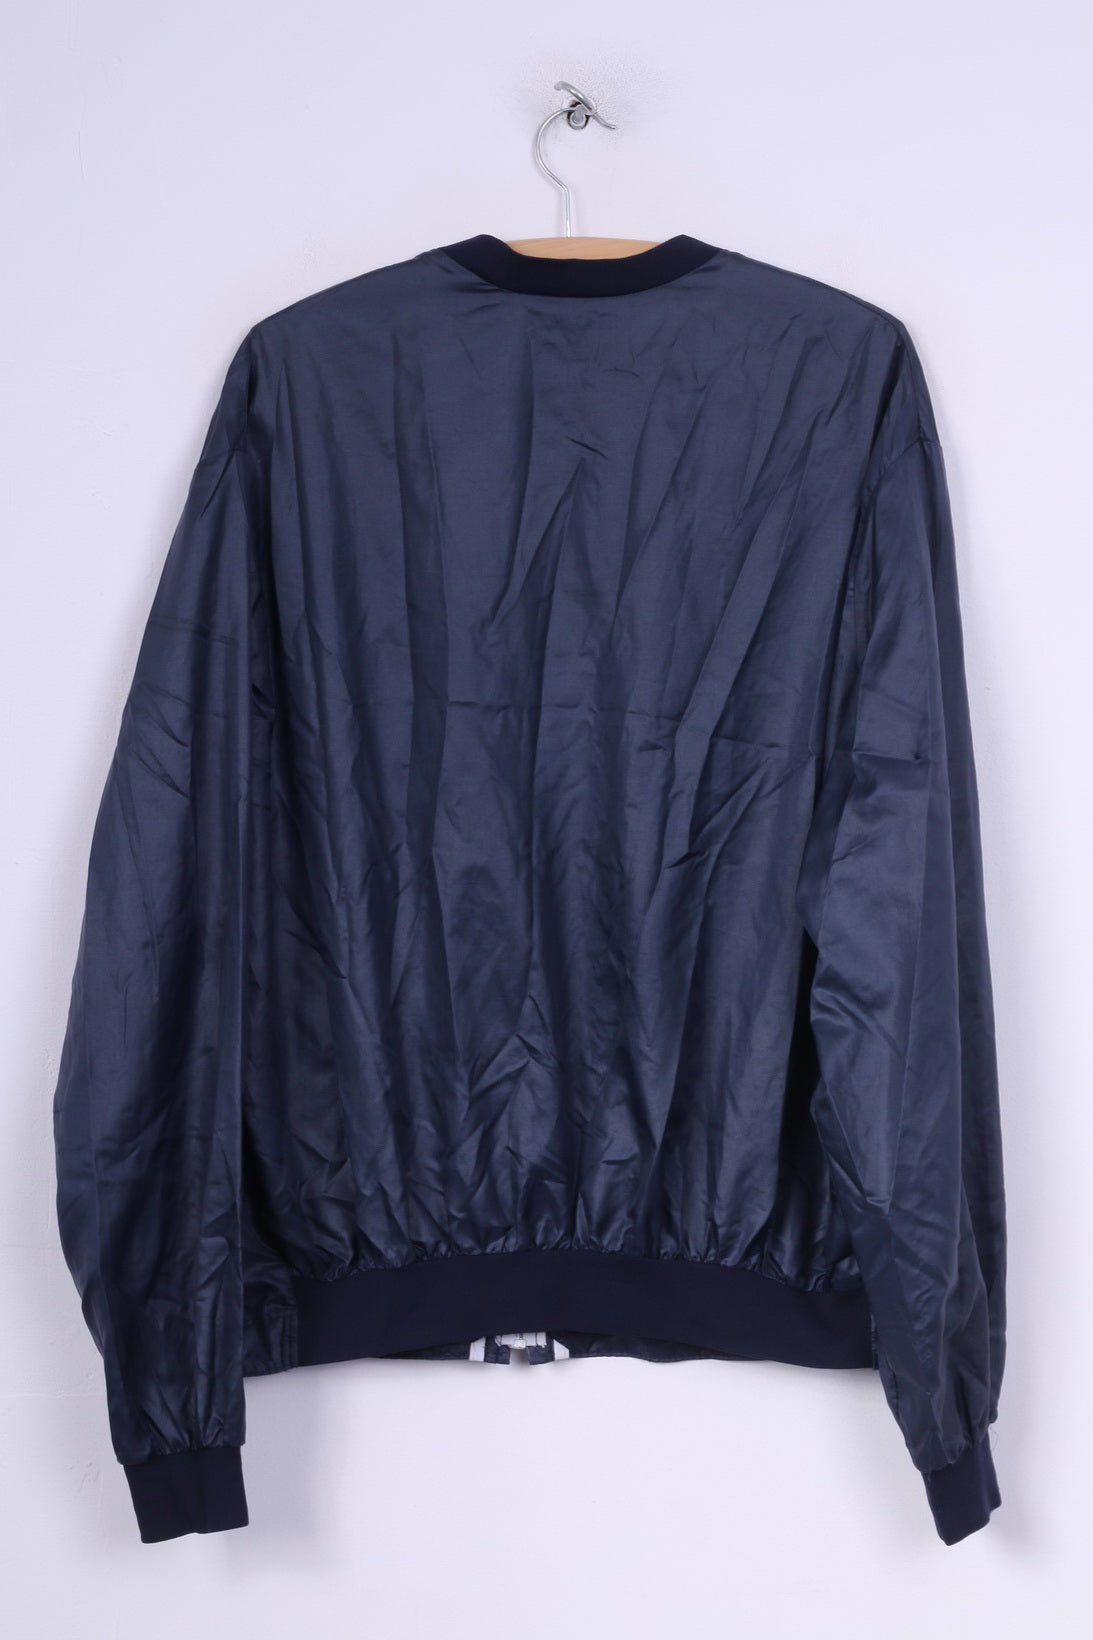 TilT Mens 6x7 L Lightweight Jacket Full Zipper Navy Baseball Collar Peconic Queen Jeresy Sportswear Vintage